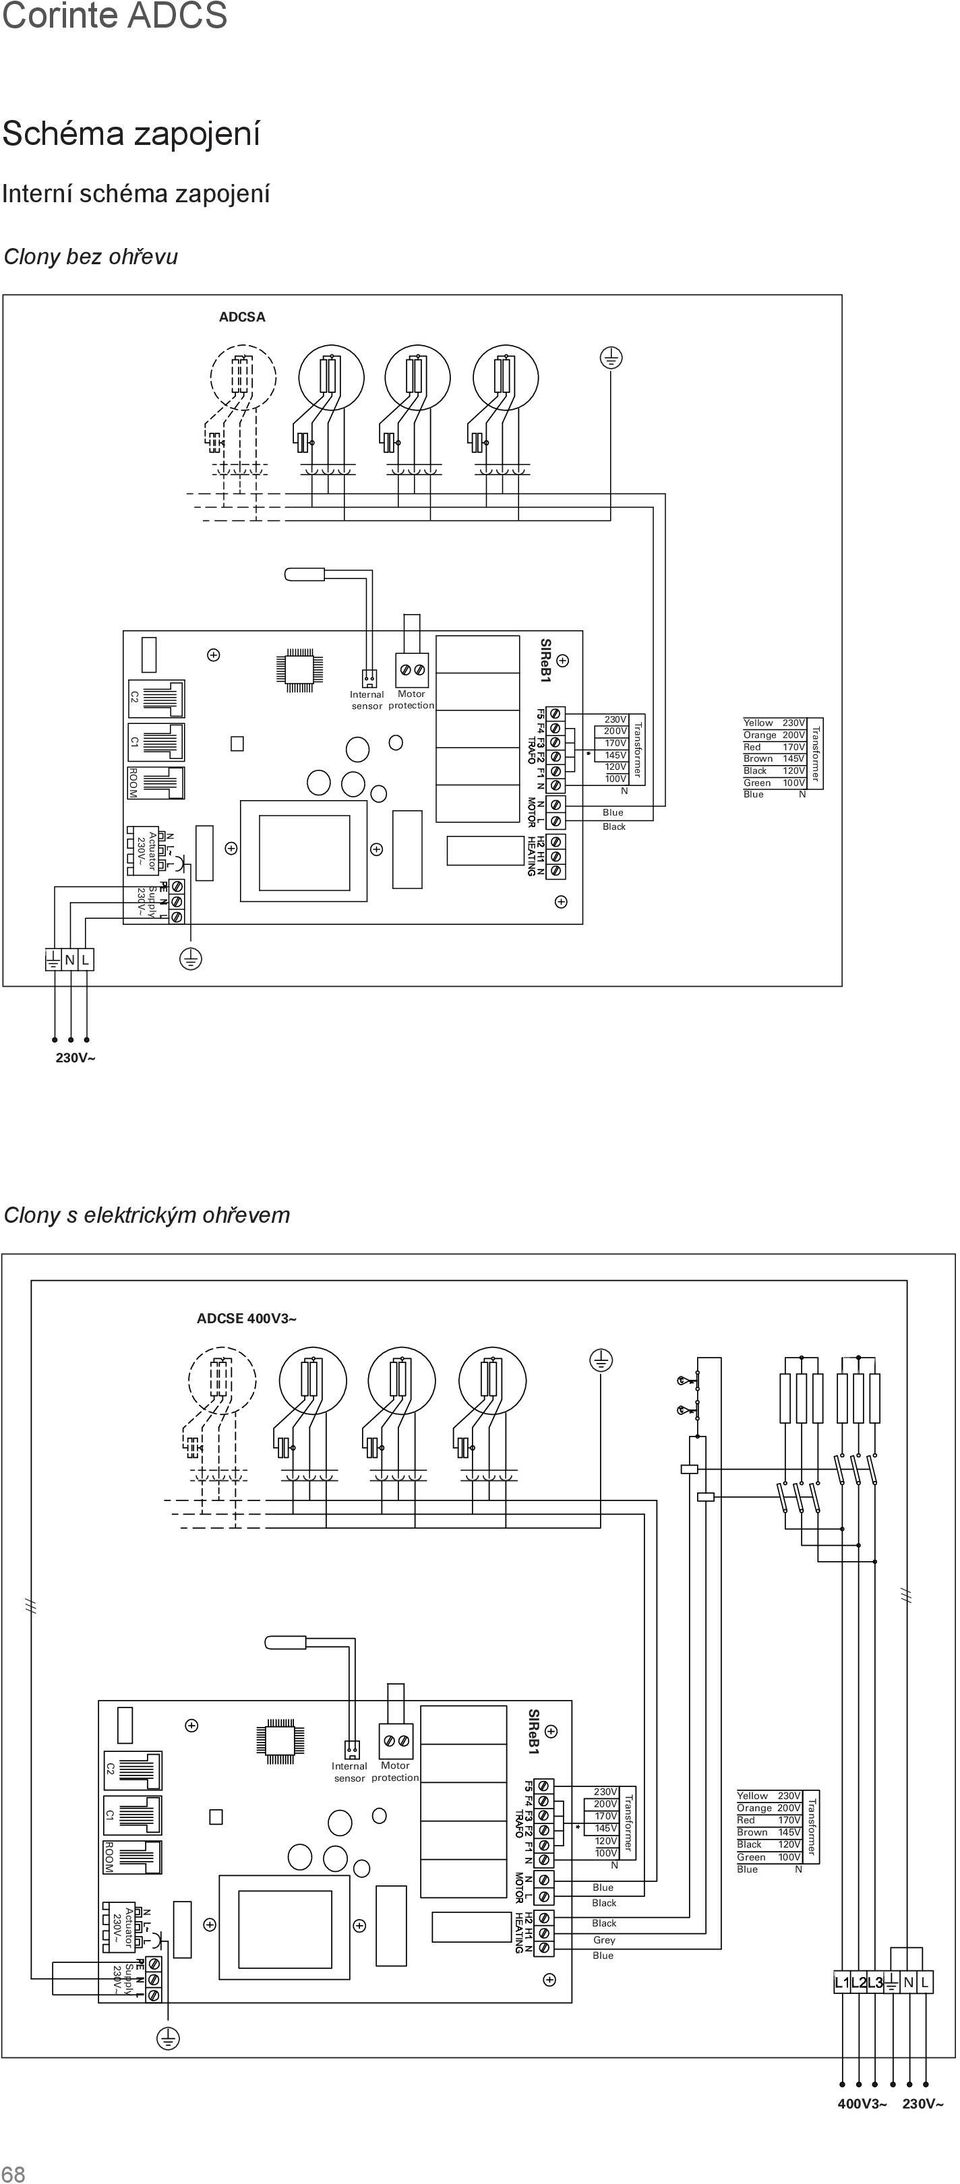 N L Clony s elektrickým ohřevem ADCSE 400V3~ SIReB1 C2 C1 ROOM Internal Motor sensor protection 230V 200V 170V 145V 120V